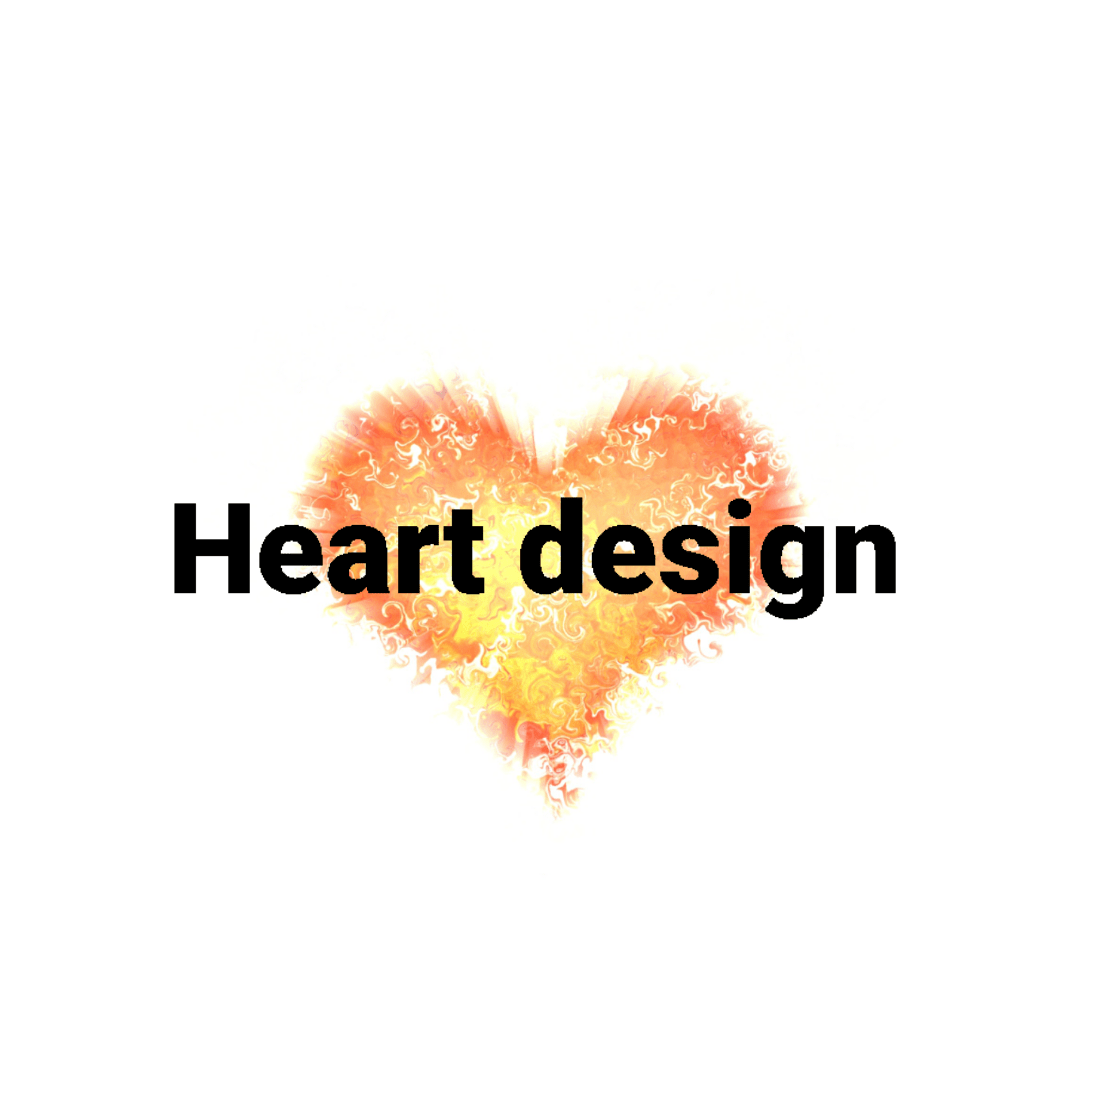 Heart Design cover image.